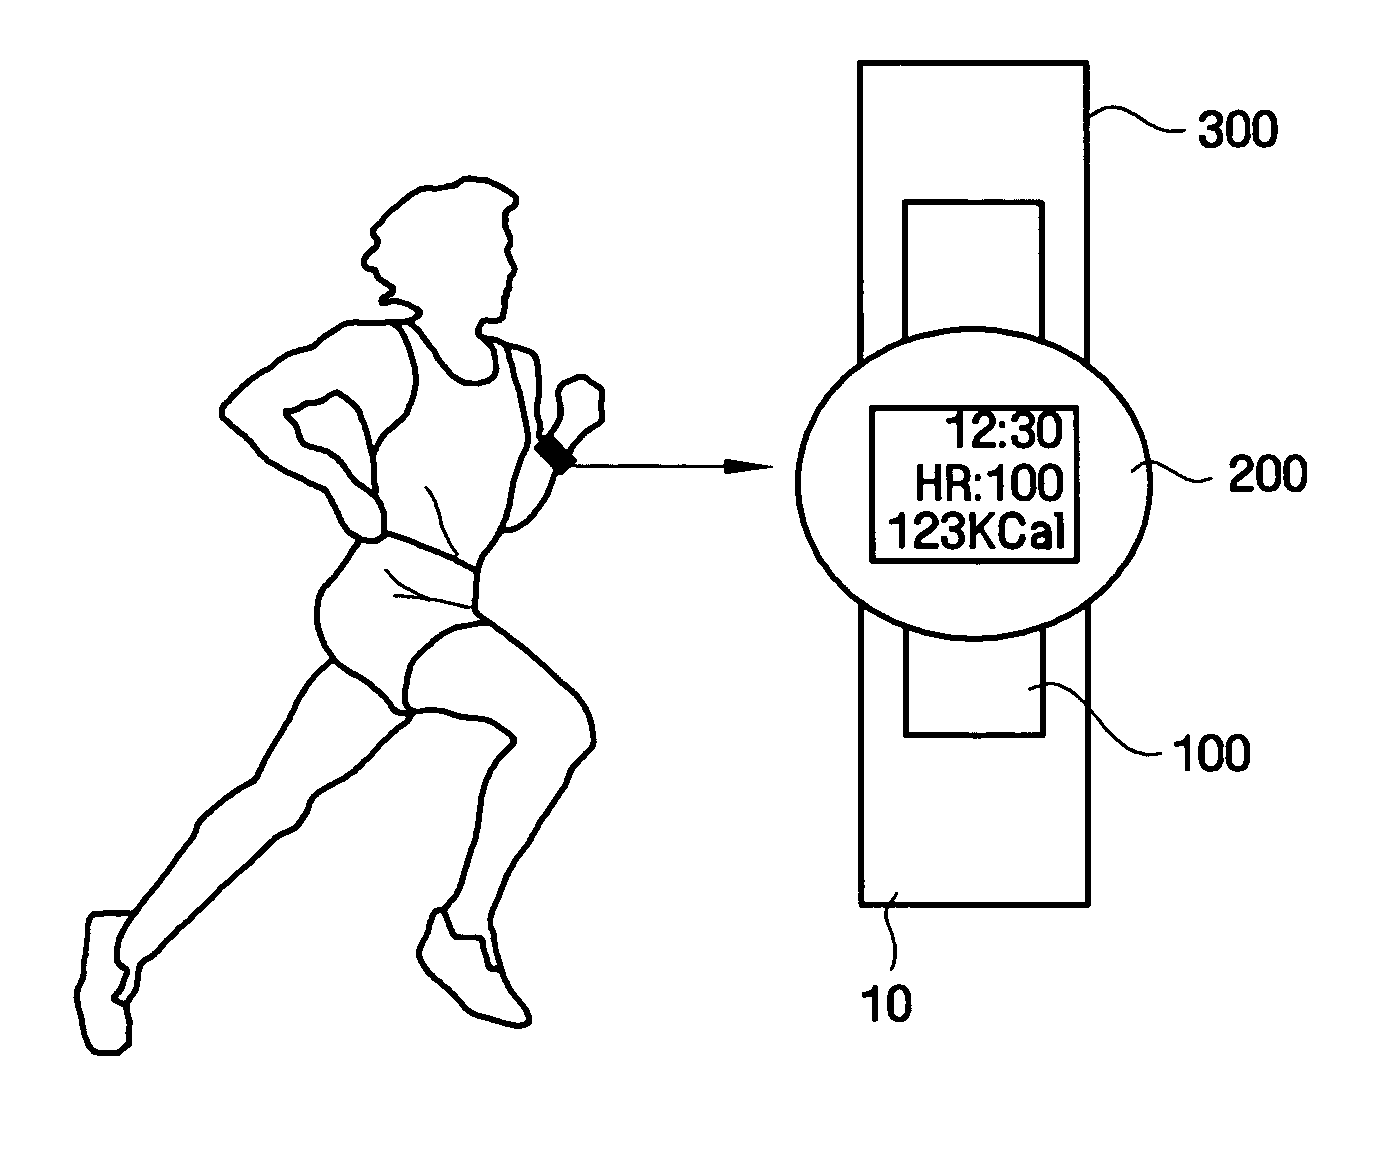 Apparatus and method for measuring quantity of exercise through film-type pressure sensor